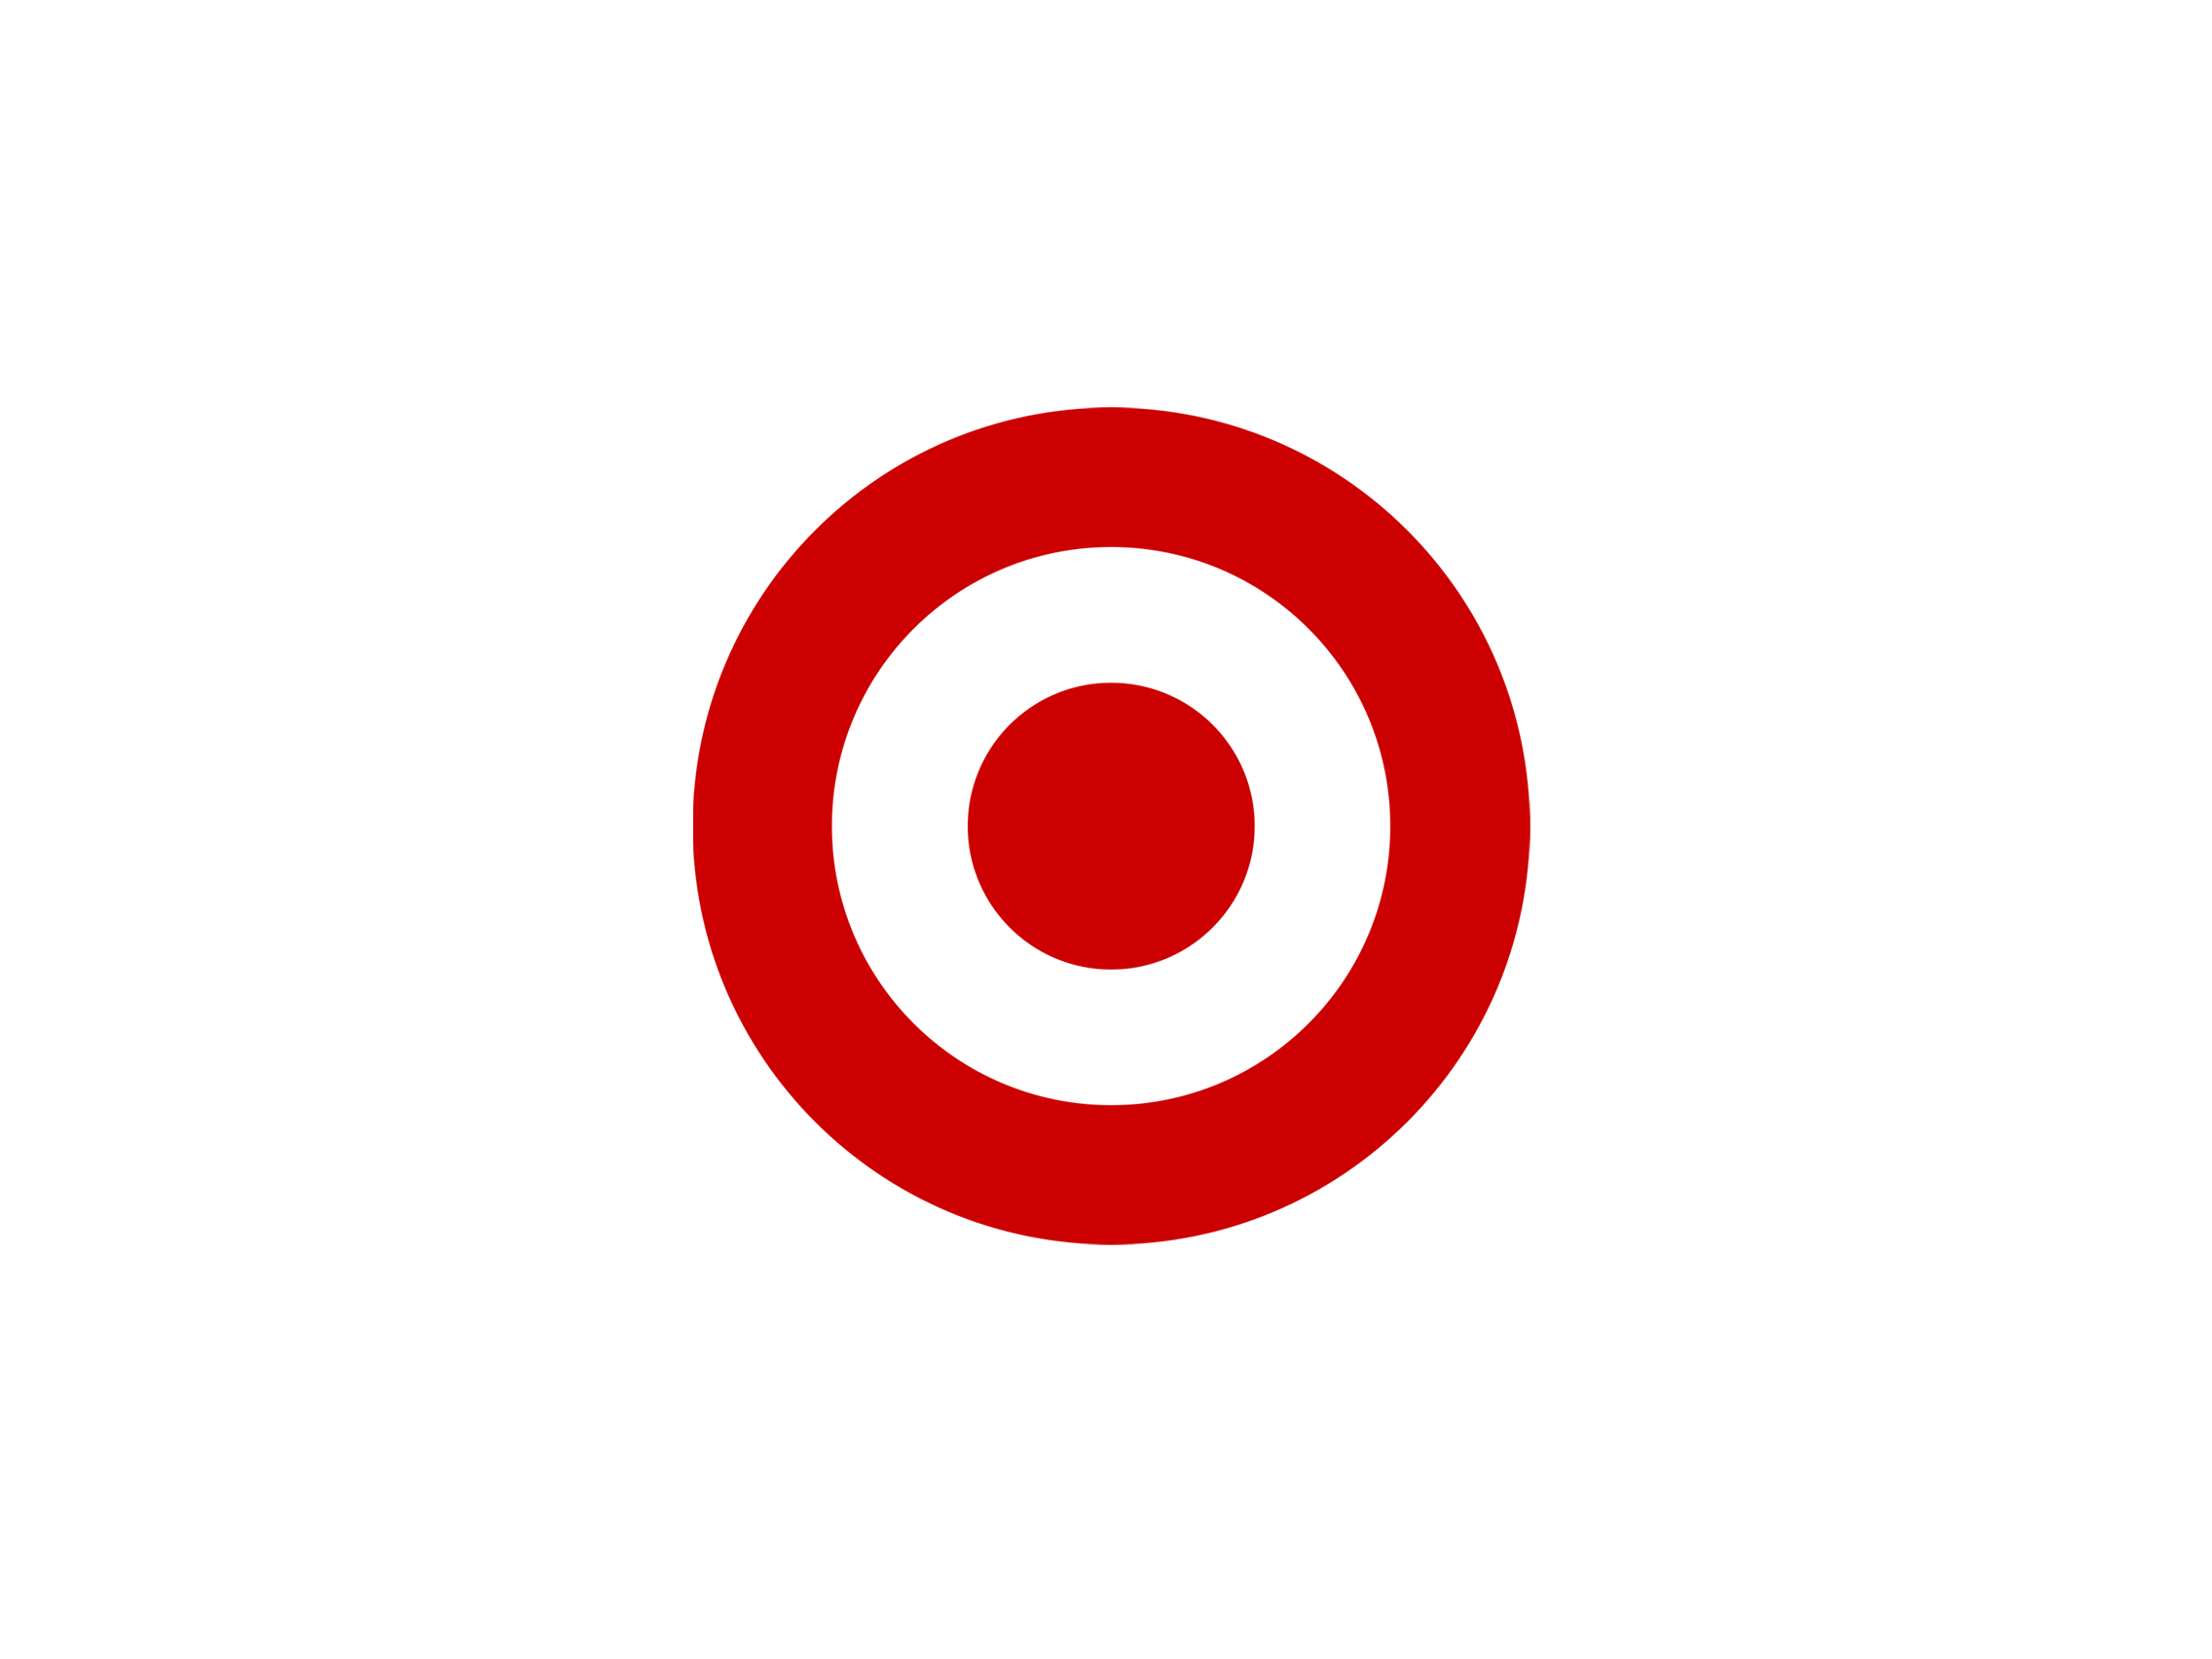 target logo | Logospike.com: Famous and Free Vector Logos